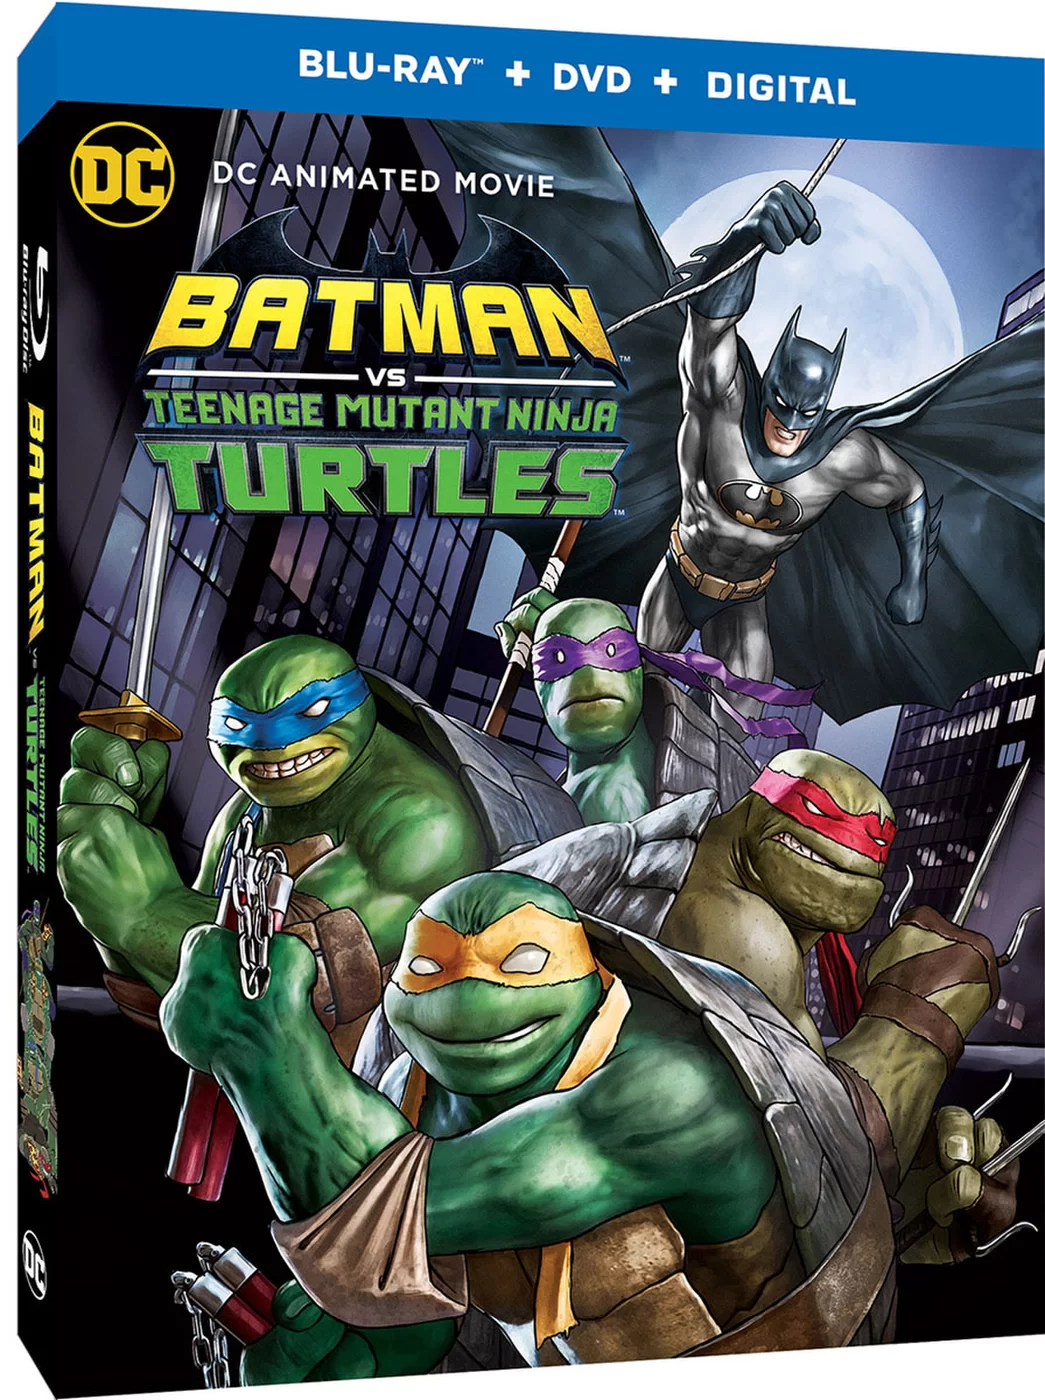 World collide in Batman vs. Teenage Mutant Ninja Turtles trailer